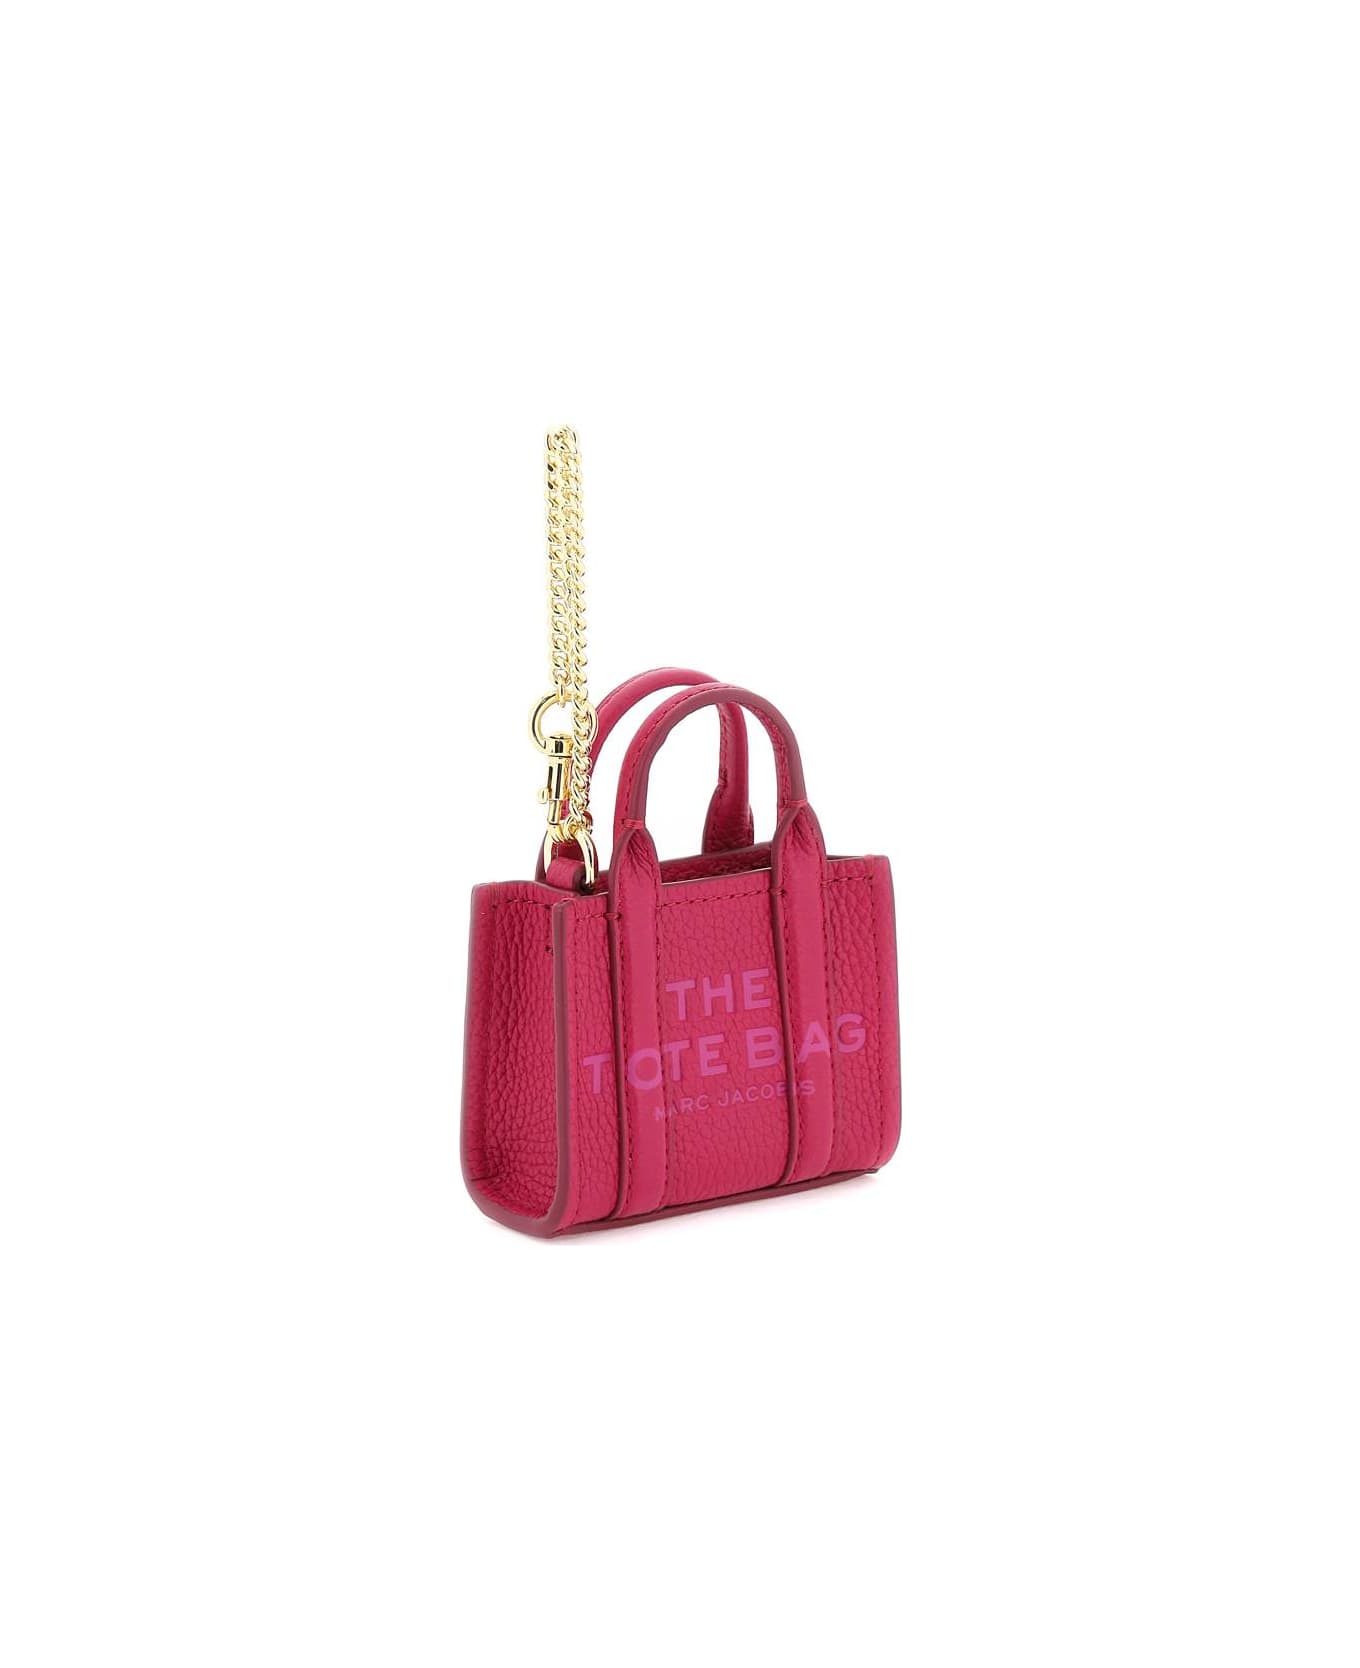 Marc Jacobs The Nano Tote Bag Charm - LIPSTICK PINK (Pink)